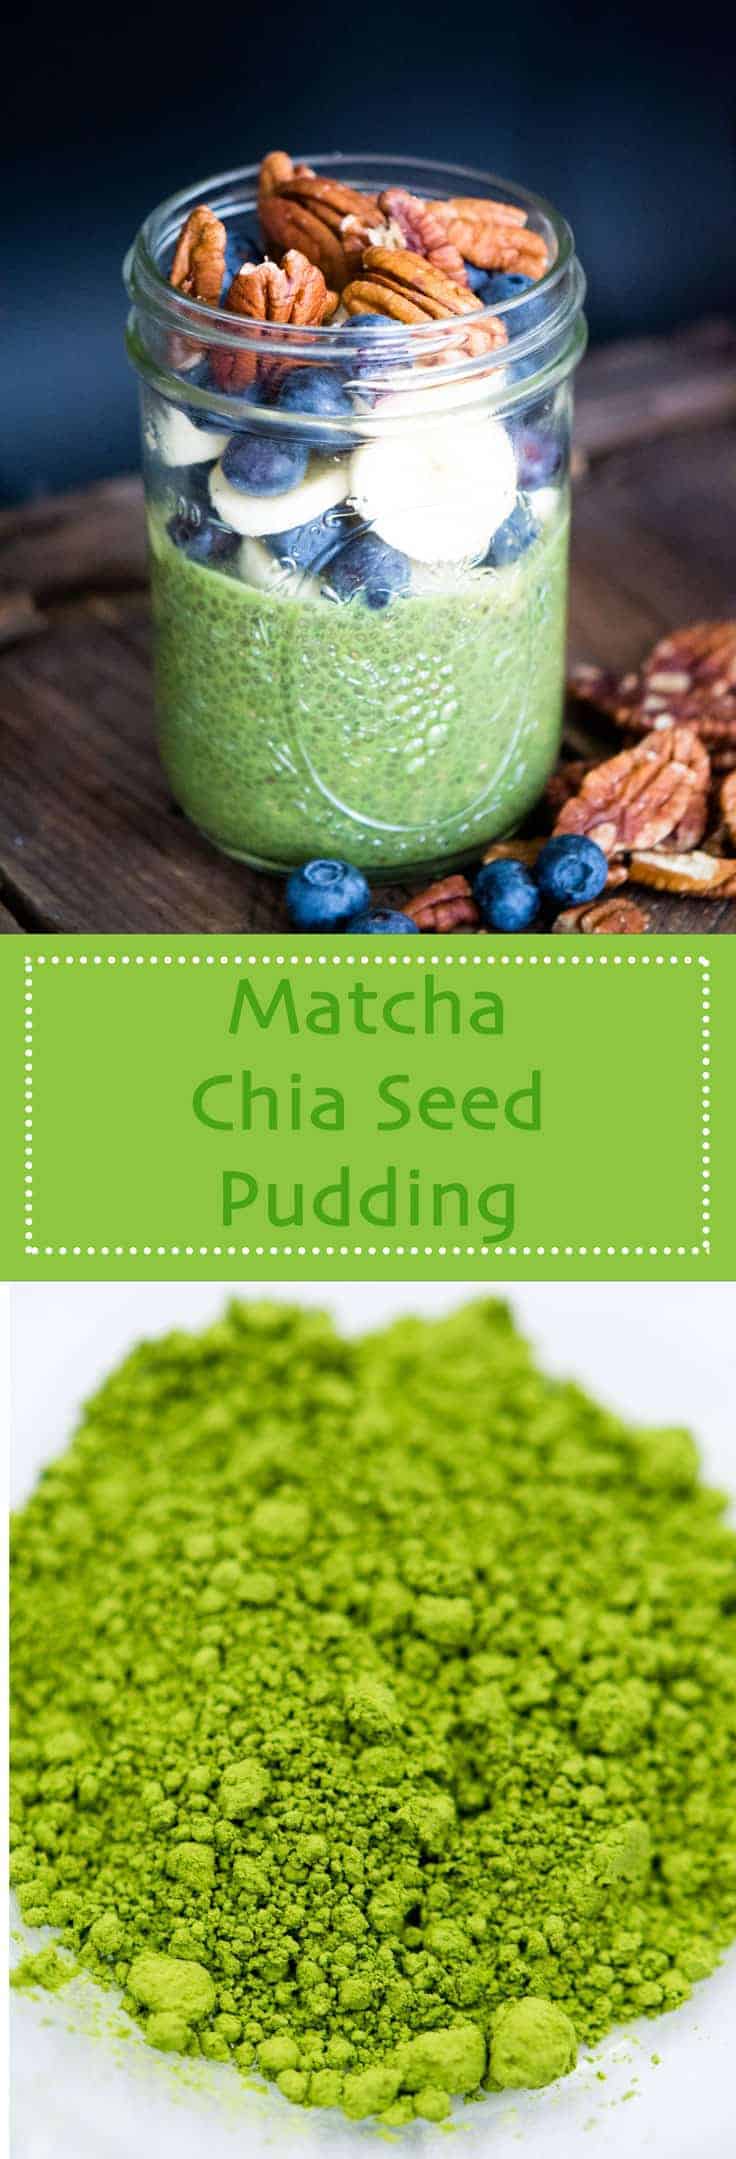 Matcha green tea powder brings energy to this superfood breakfast